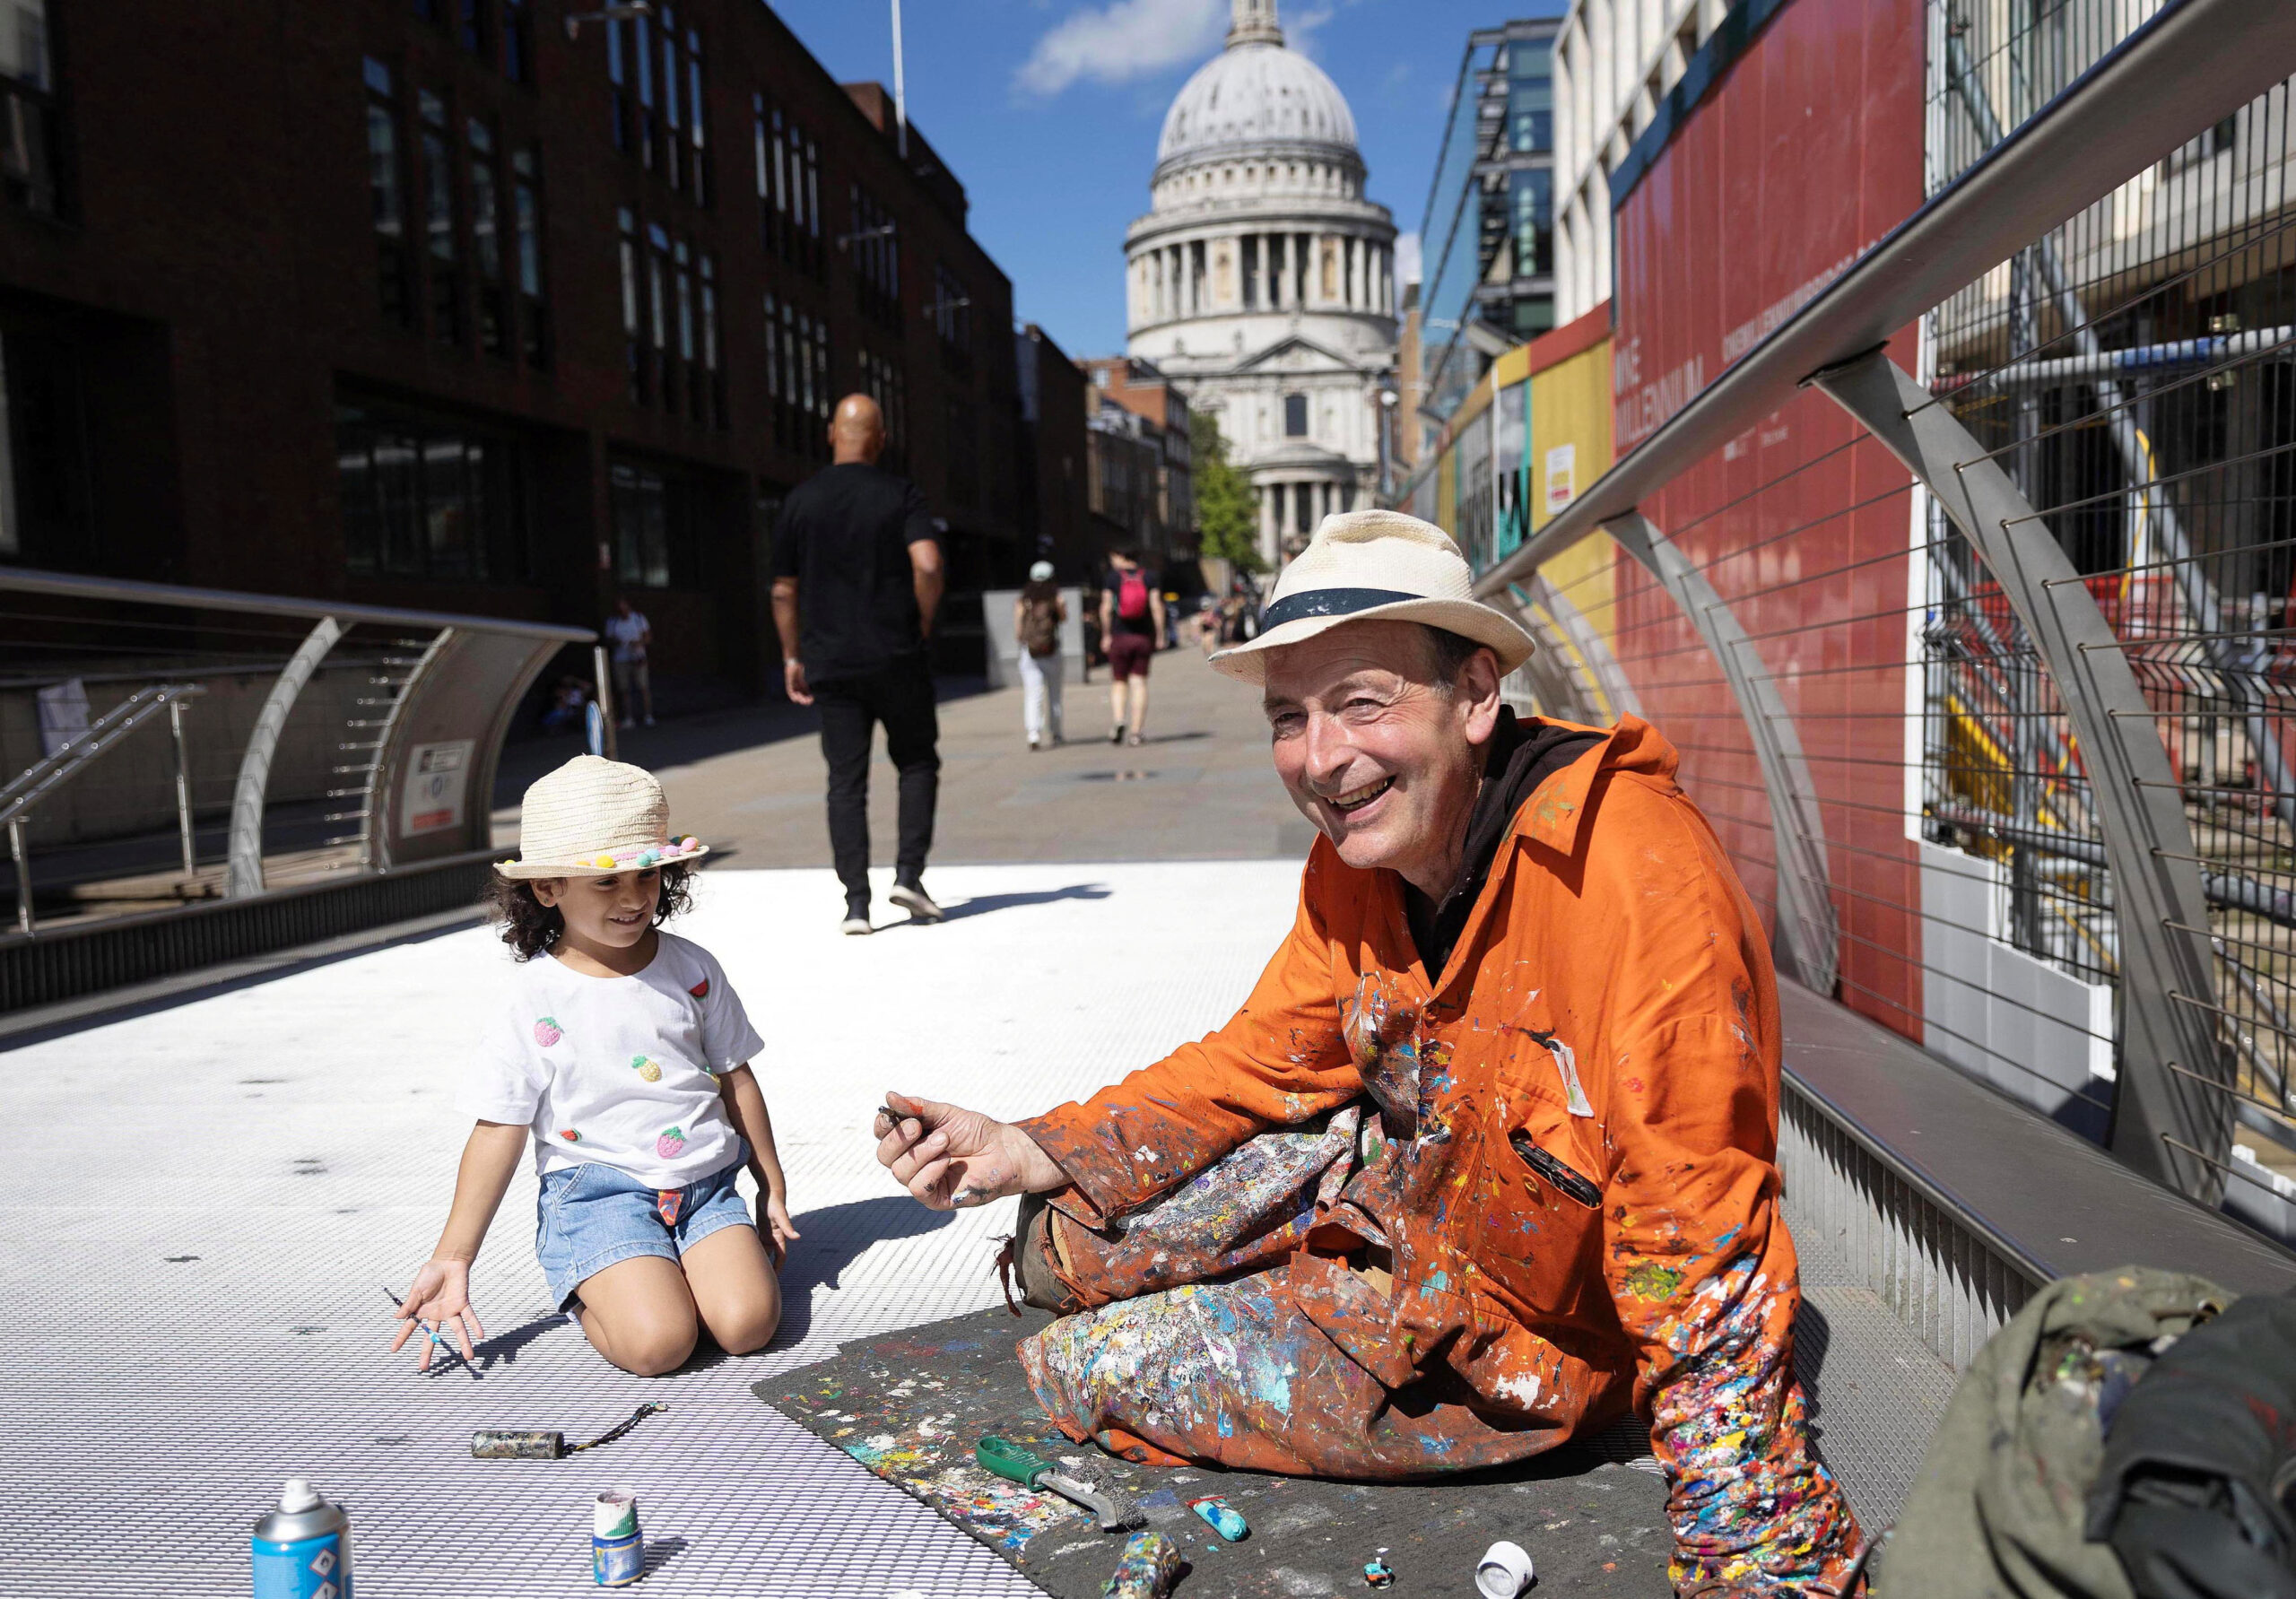 Chewing gum artist paints 'hidden world beneath their feet', in London